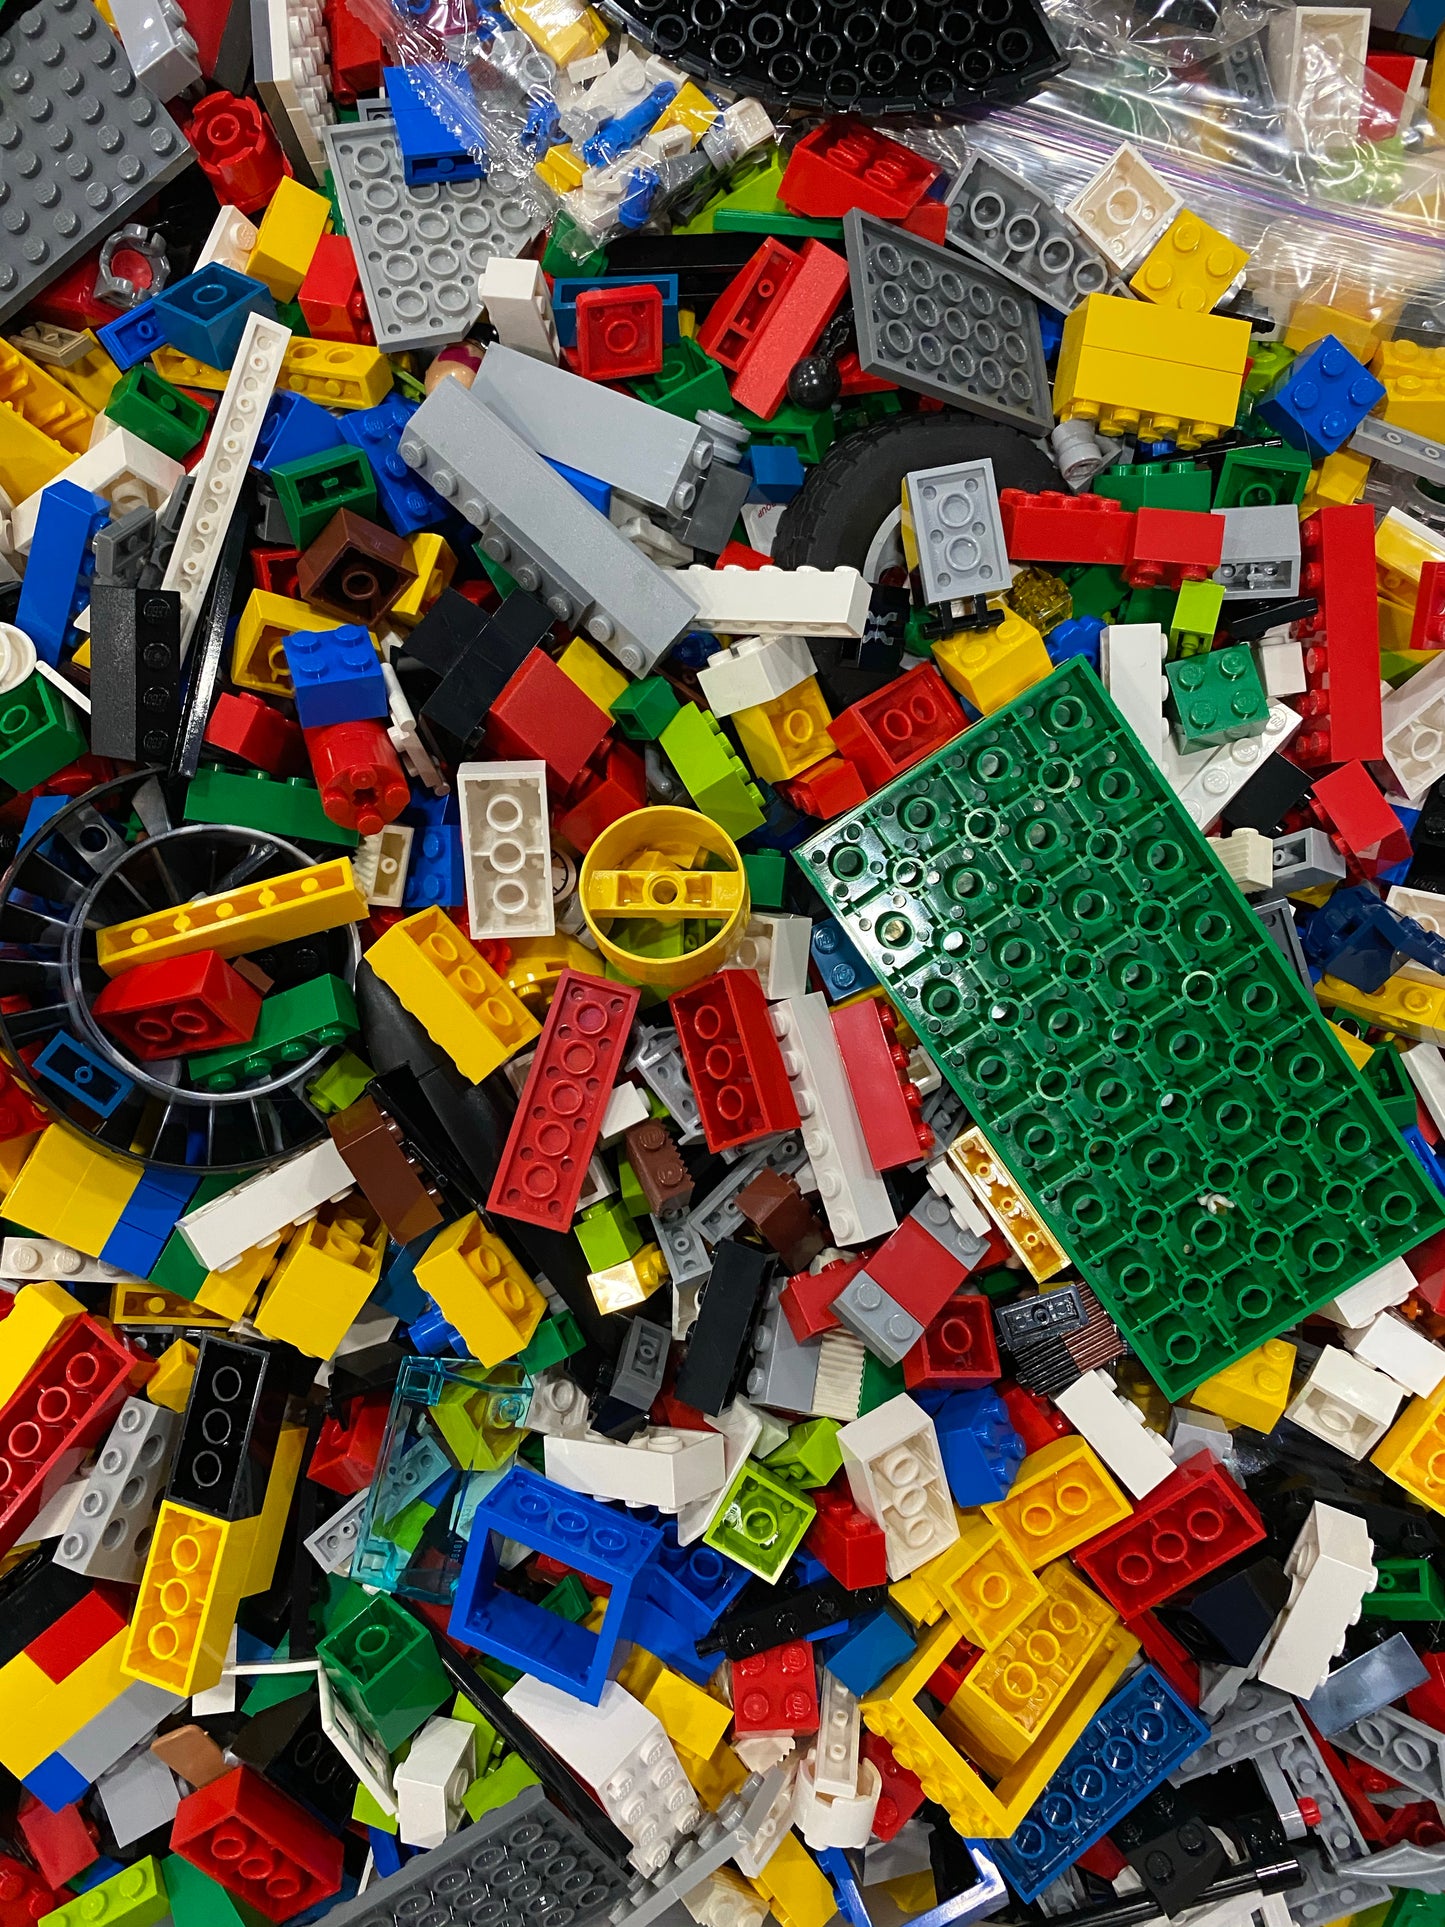 LEGO Sorting Box Blue (5007279)